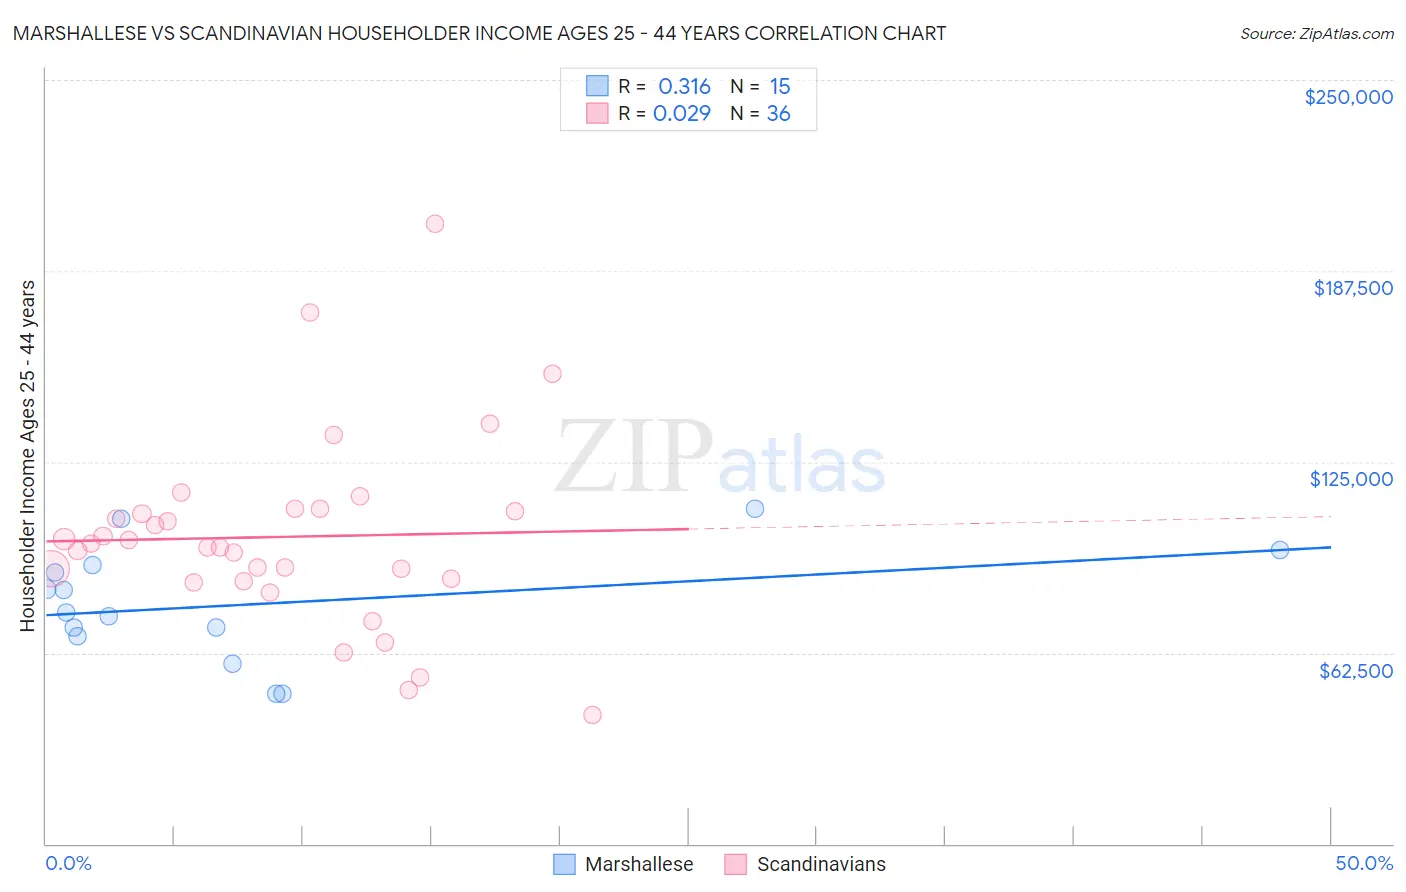 Marshallese vs Scandinavian Householder Income Ages 25 - 44 years